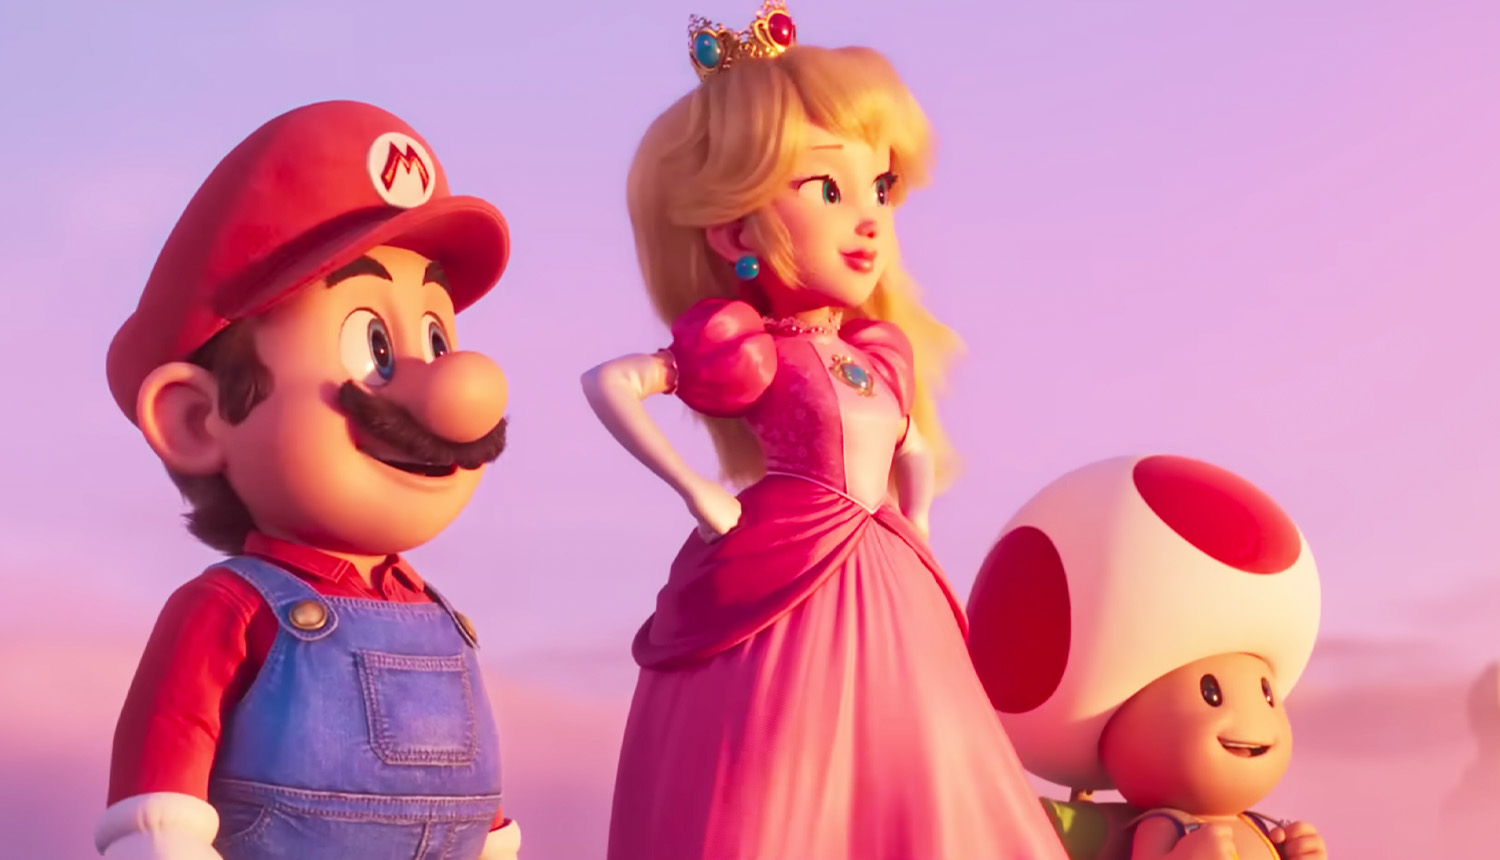 Super Mario Bros Movie': Jack Black Teaches Fans How to Sound Like